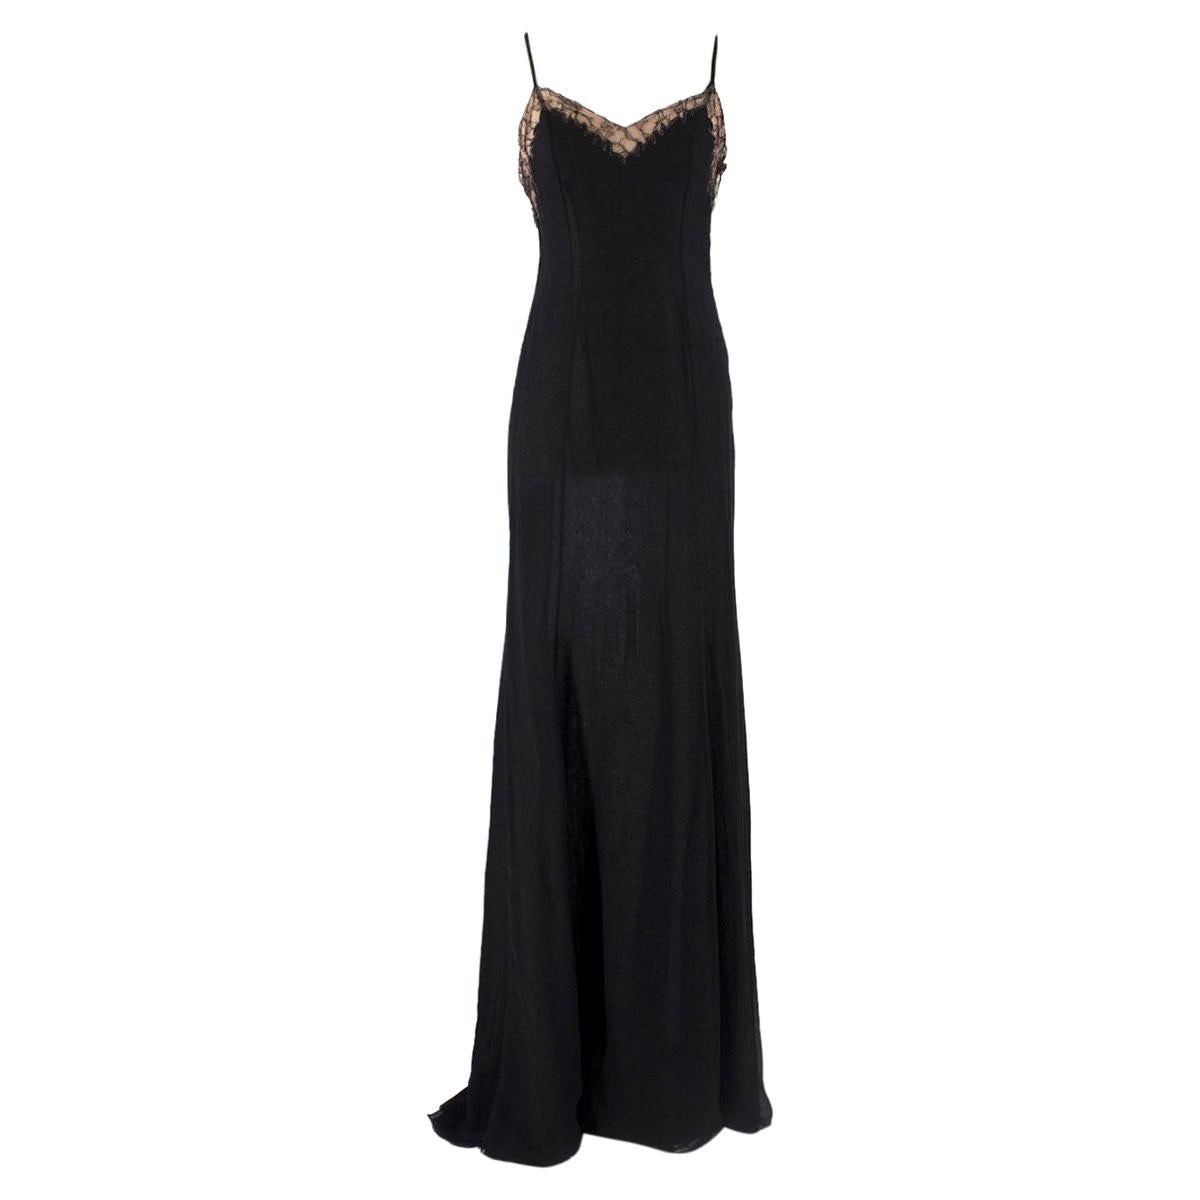 Versace Black Silk Gown Slip Dress with Chain Details 38